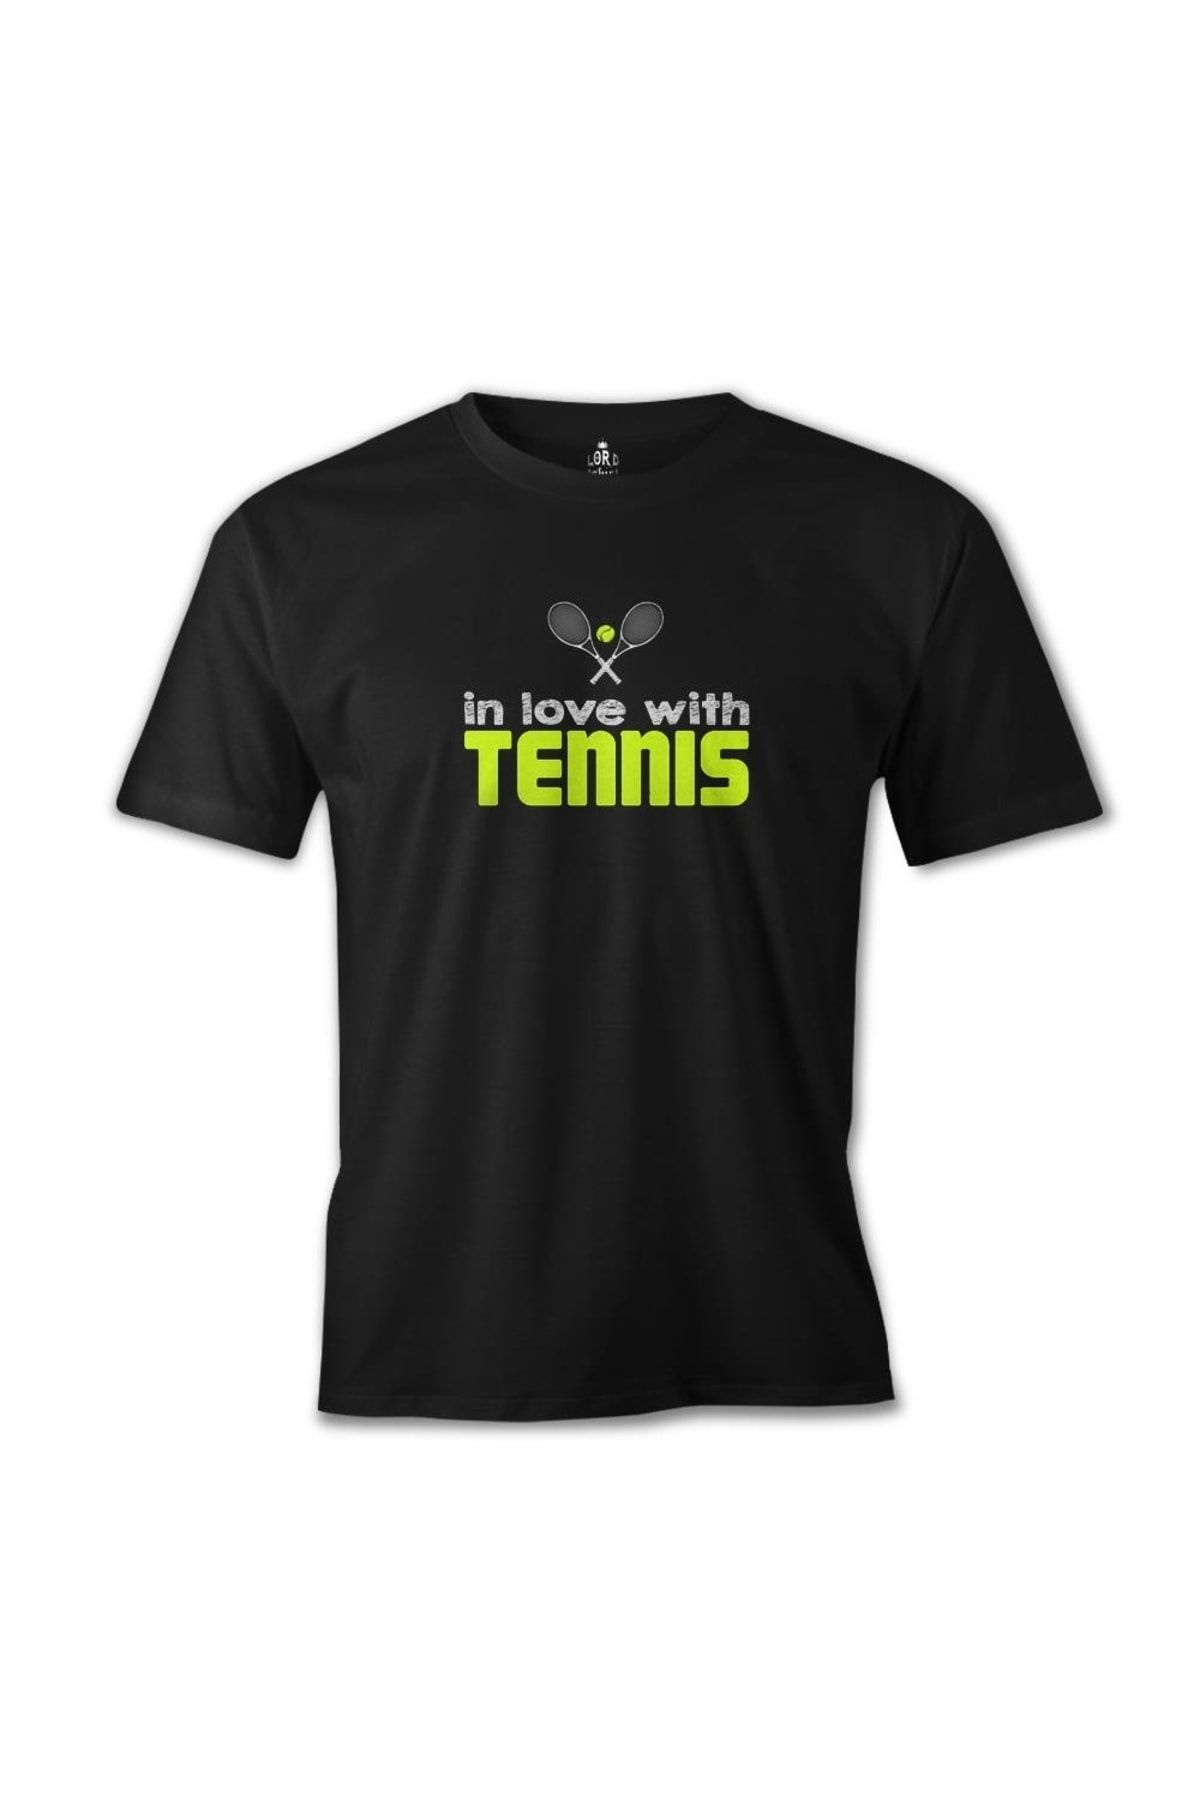 Lord T-Shirt Tenis - In Love With Siyah Erkek Tshirt